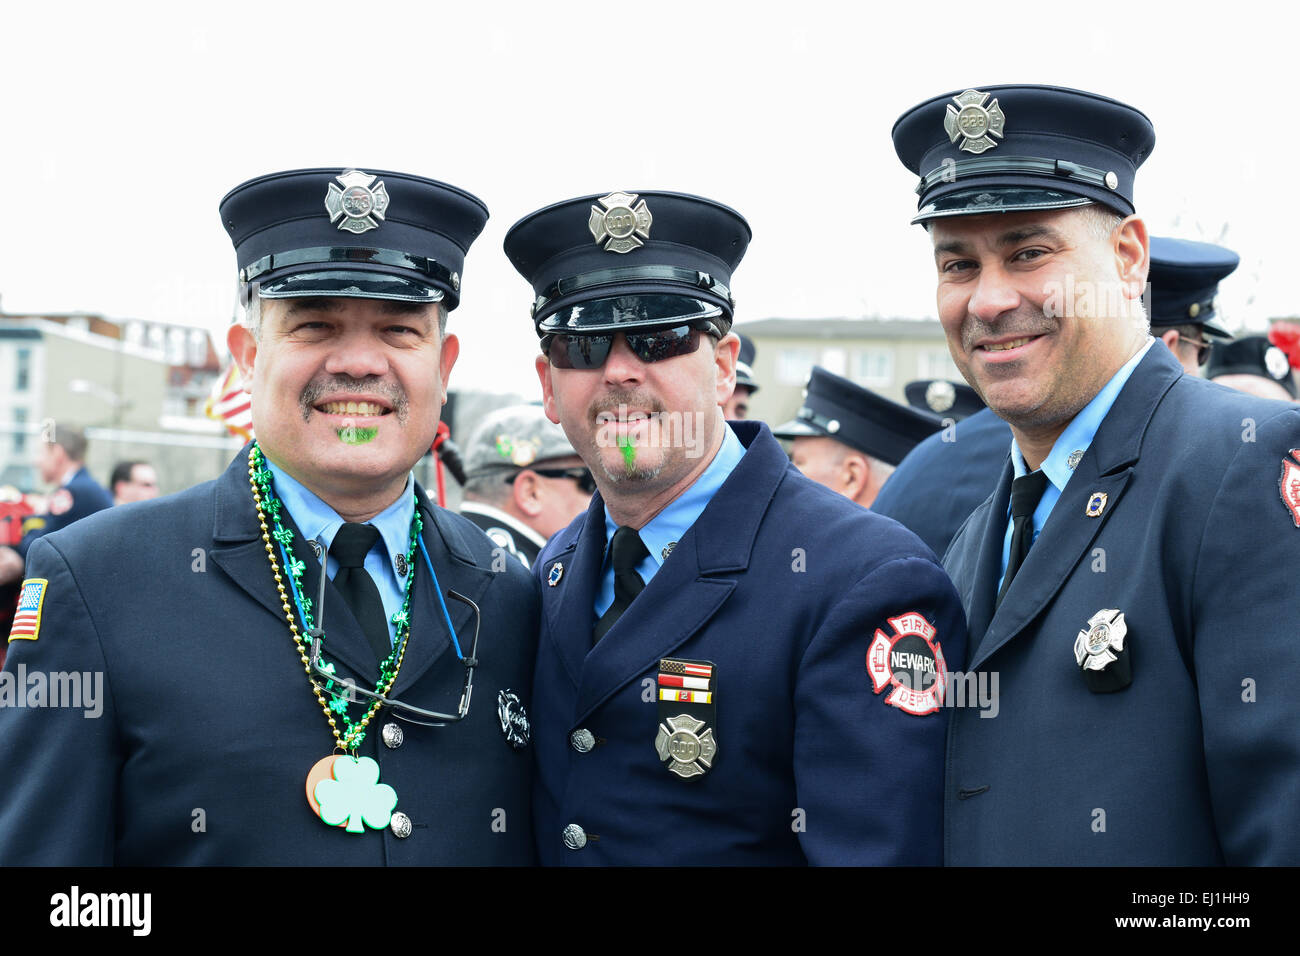 Newark firefighters celebrating the 2013 St. Patricks Day parade. Newark, New Jersey. USA Stock Photo